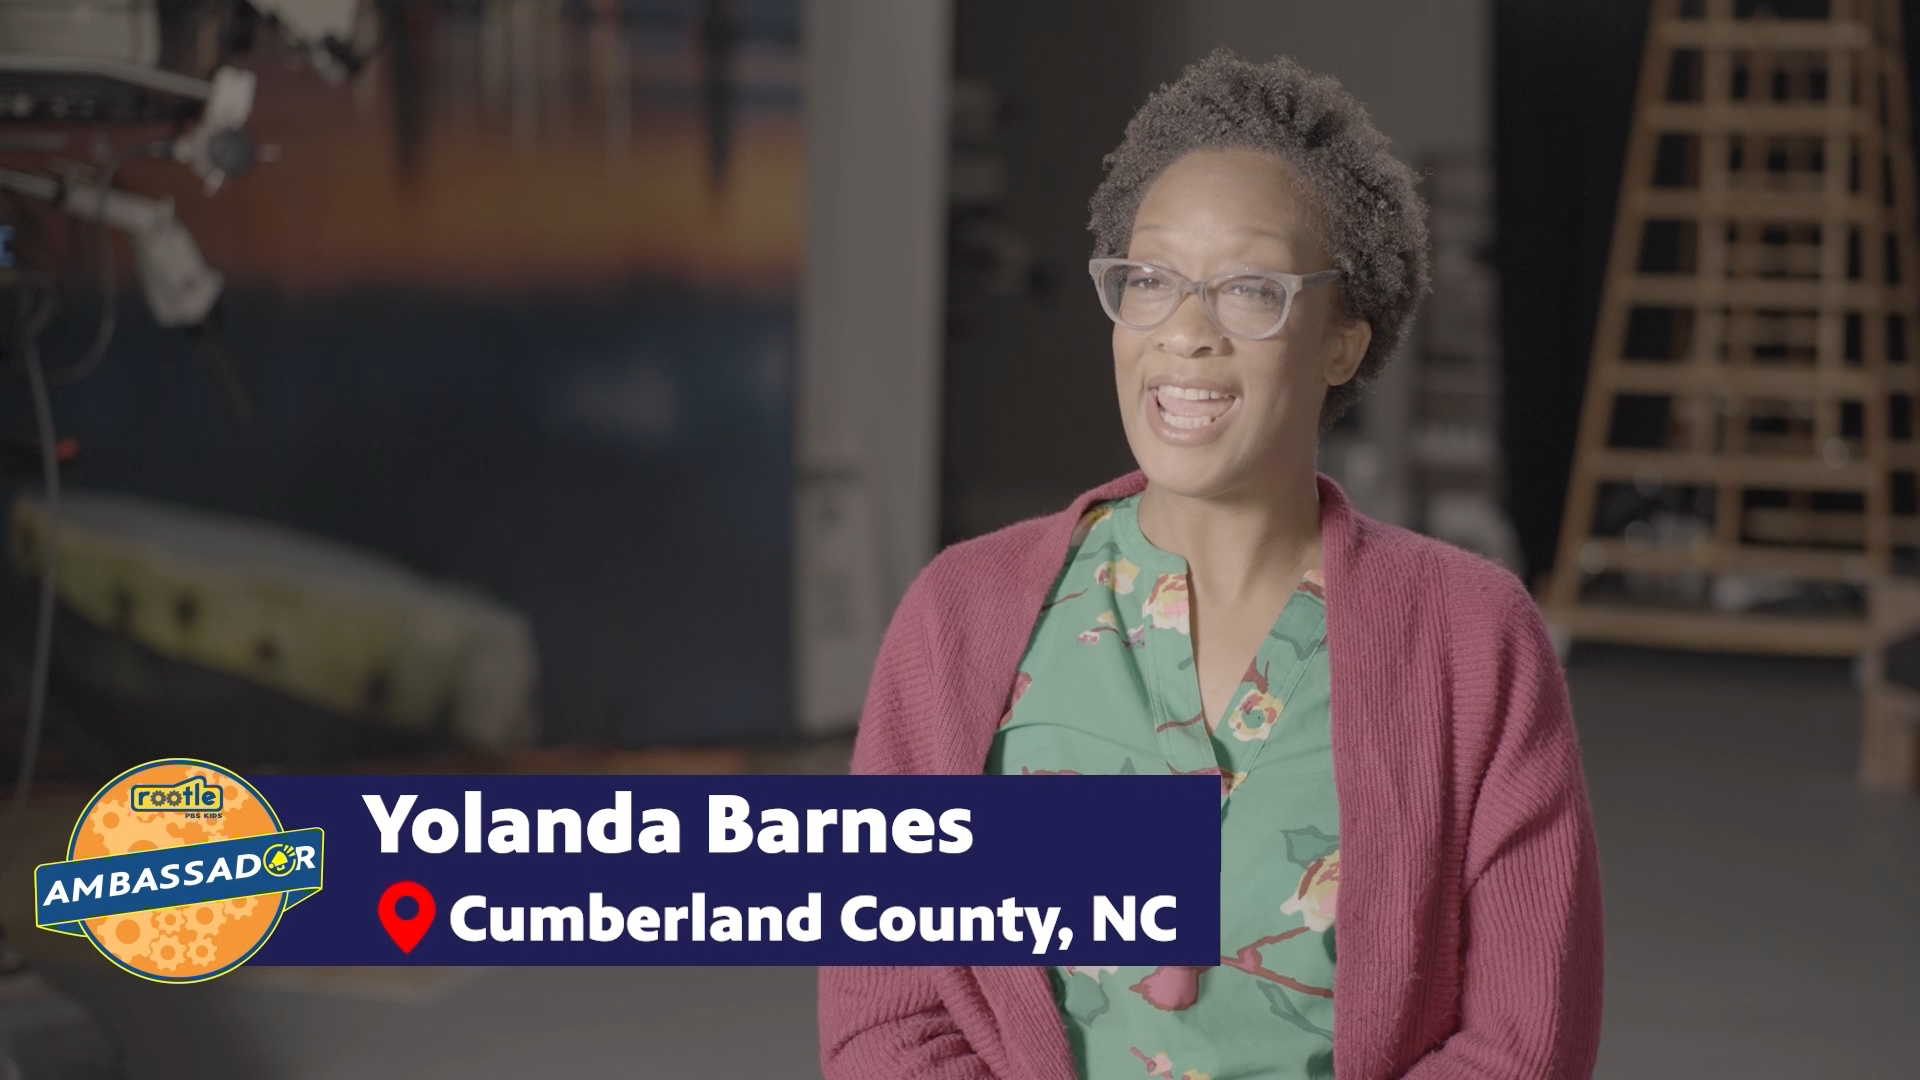 Meet Yolanda Barnes, Cumberland County Rootle Ambassador